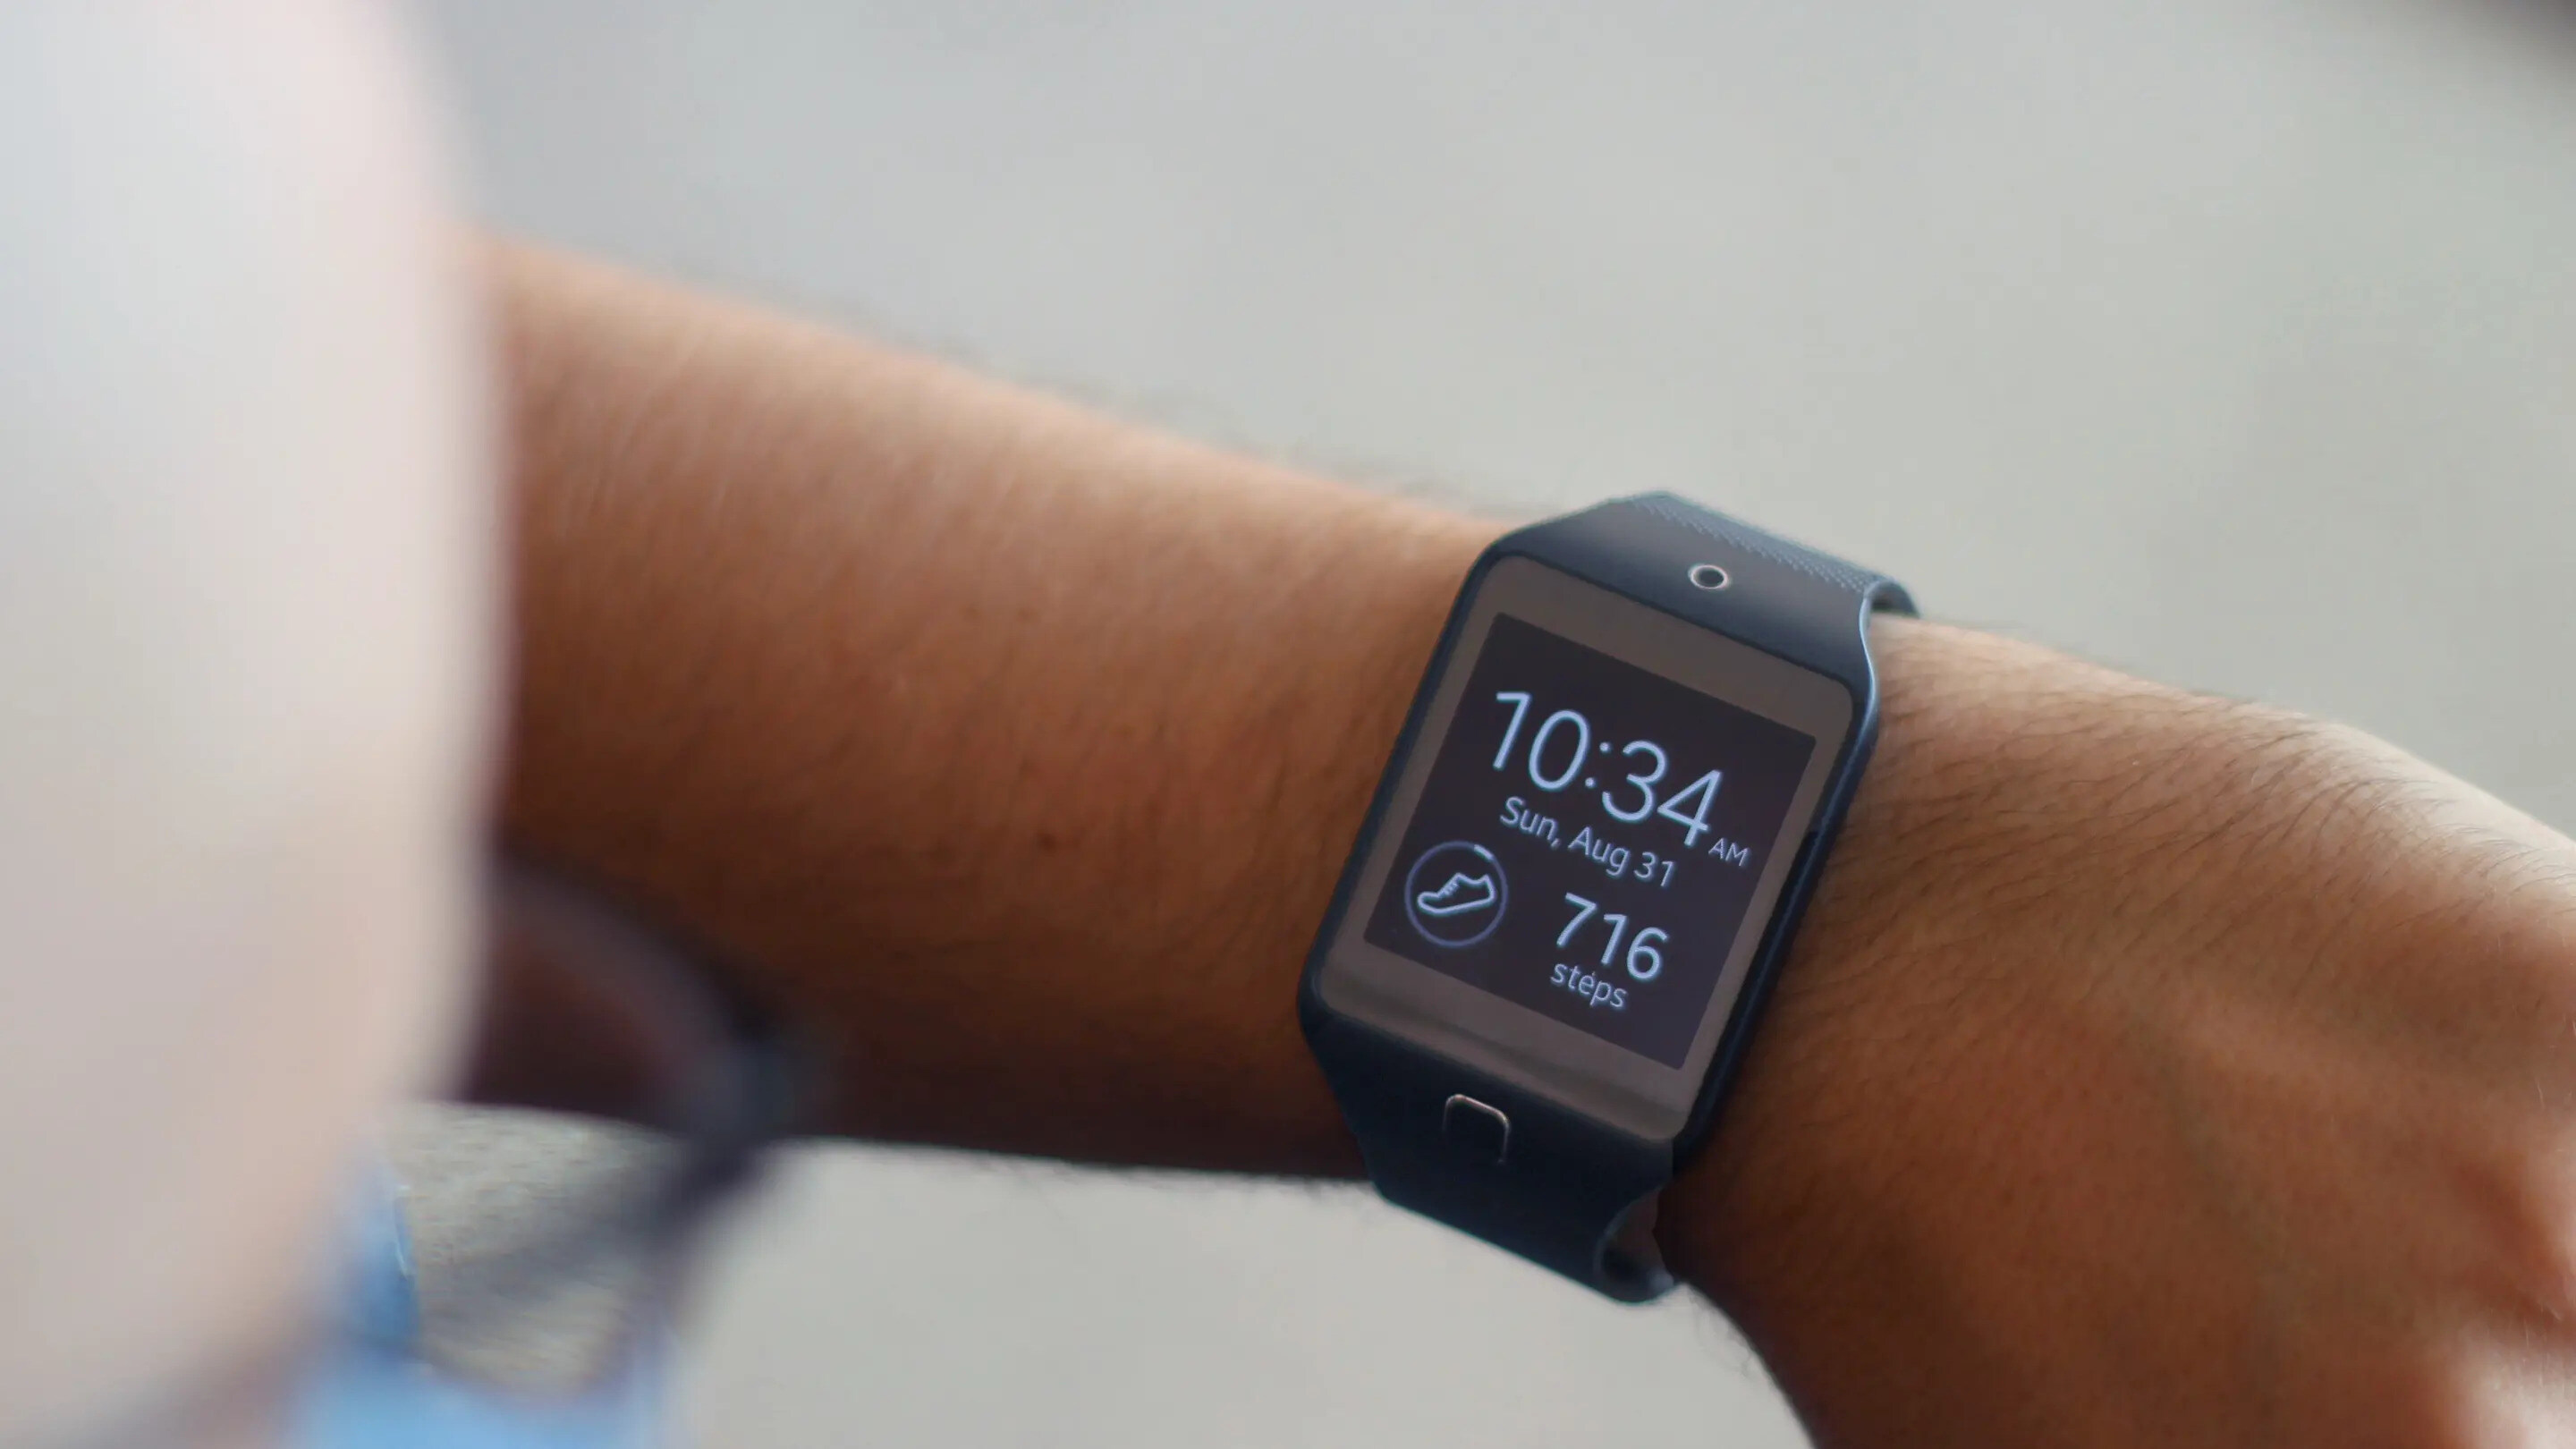 fleksy-adds-messenger-app-to-samsung-gear-2-smartwatch